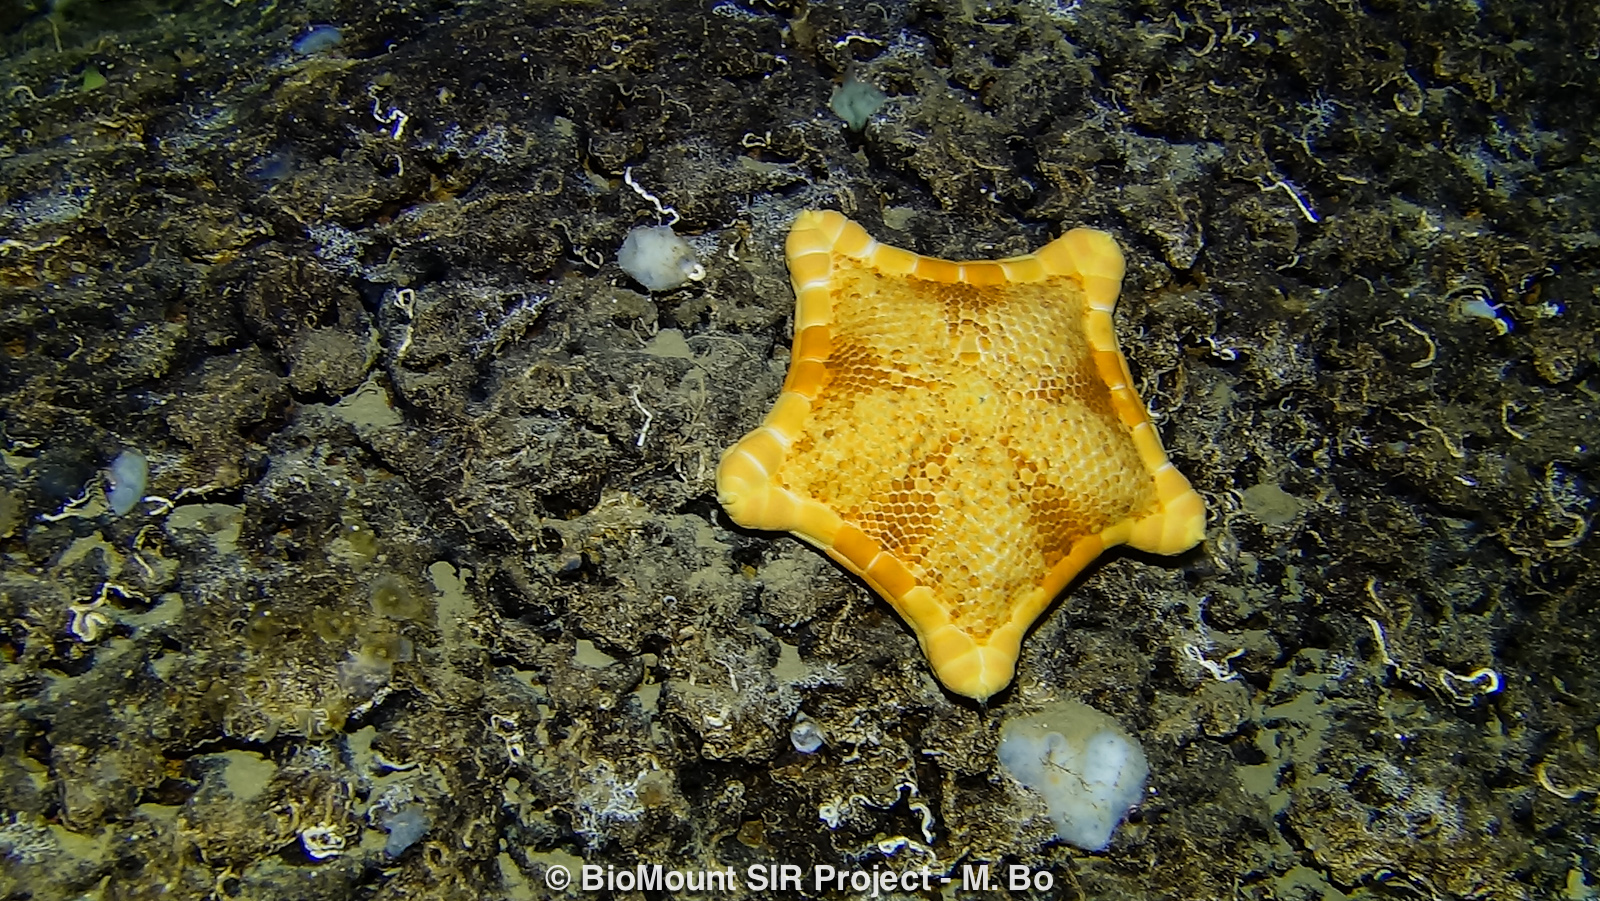 The sea star Peltaster placenta.